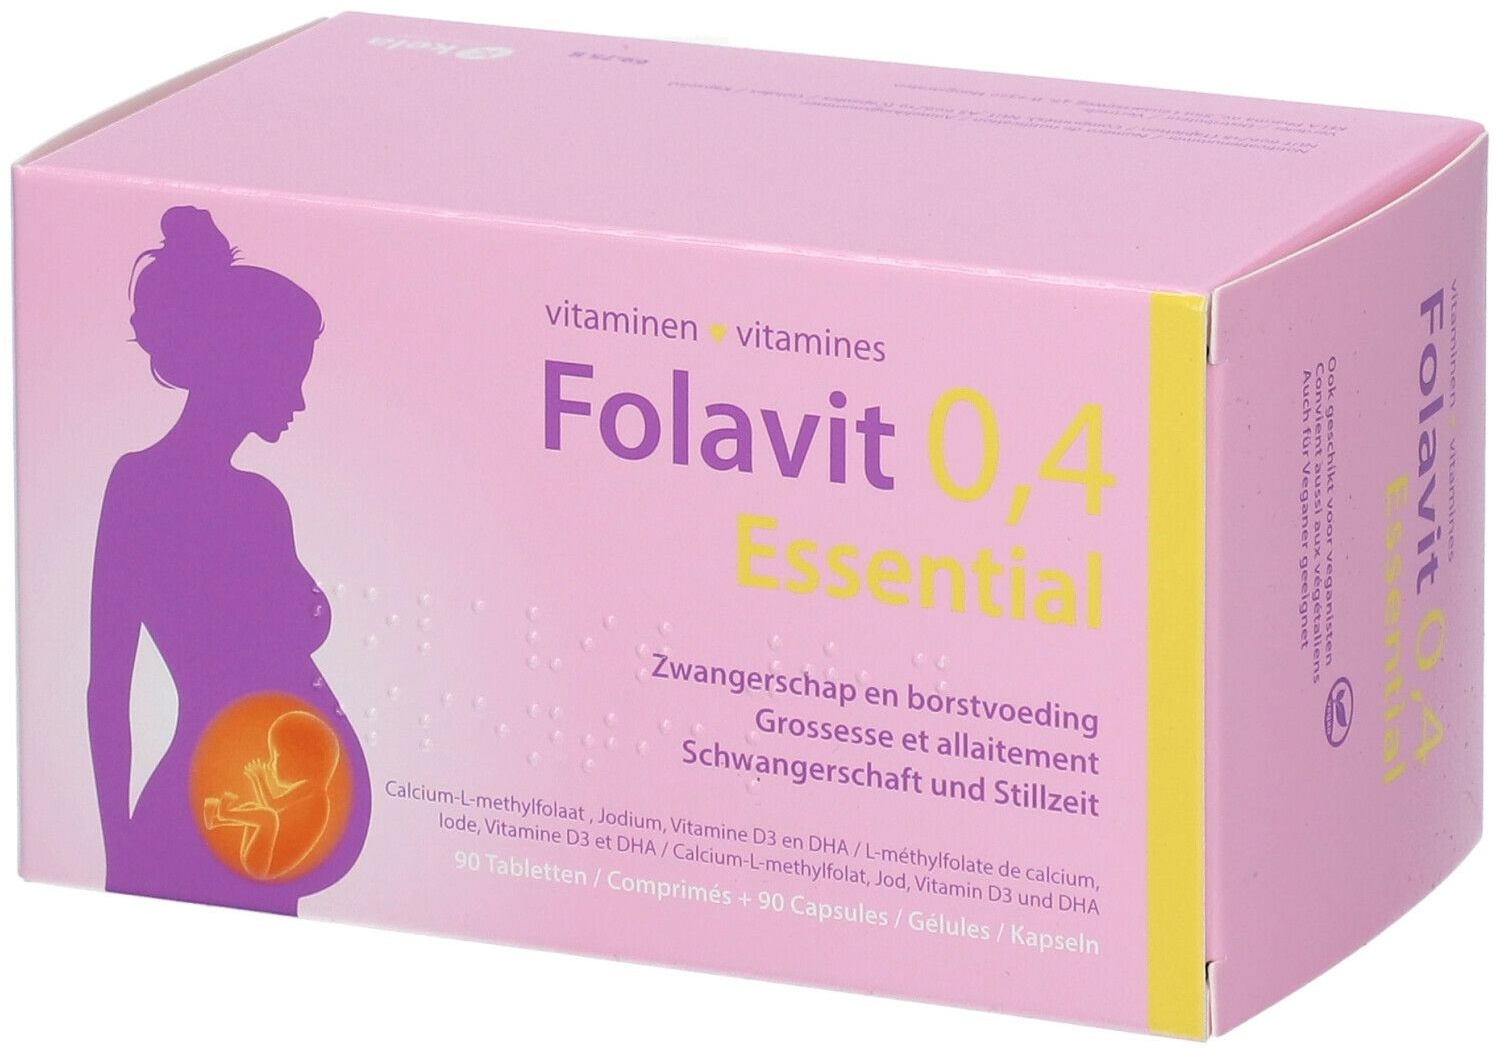 FOLAVIT 0,4 Essential 180 pc(s) emballage(s) combi